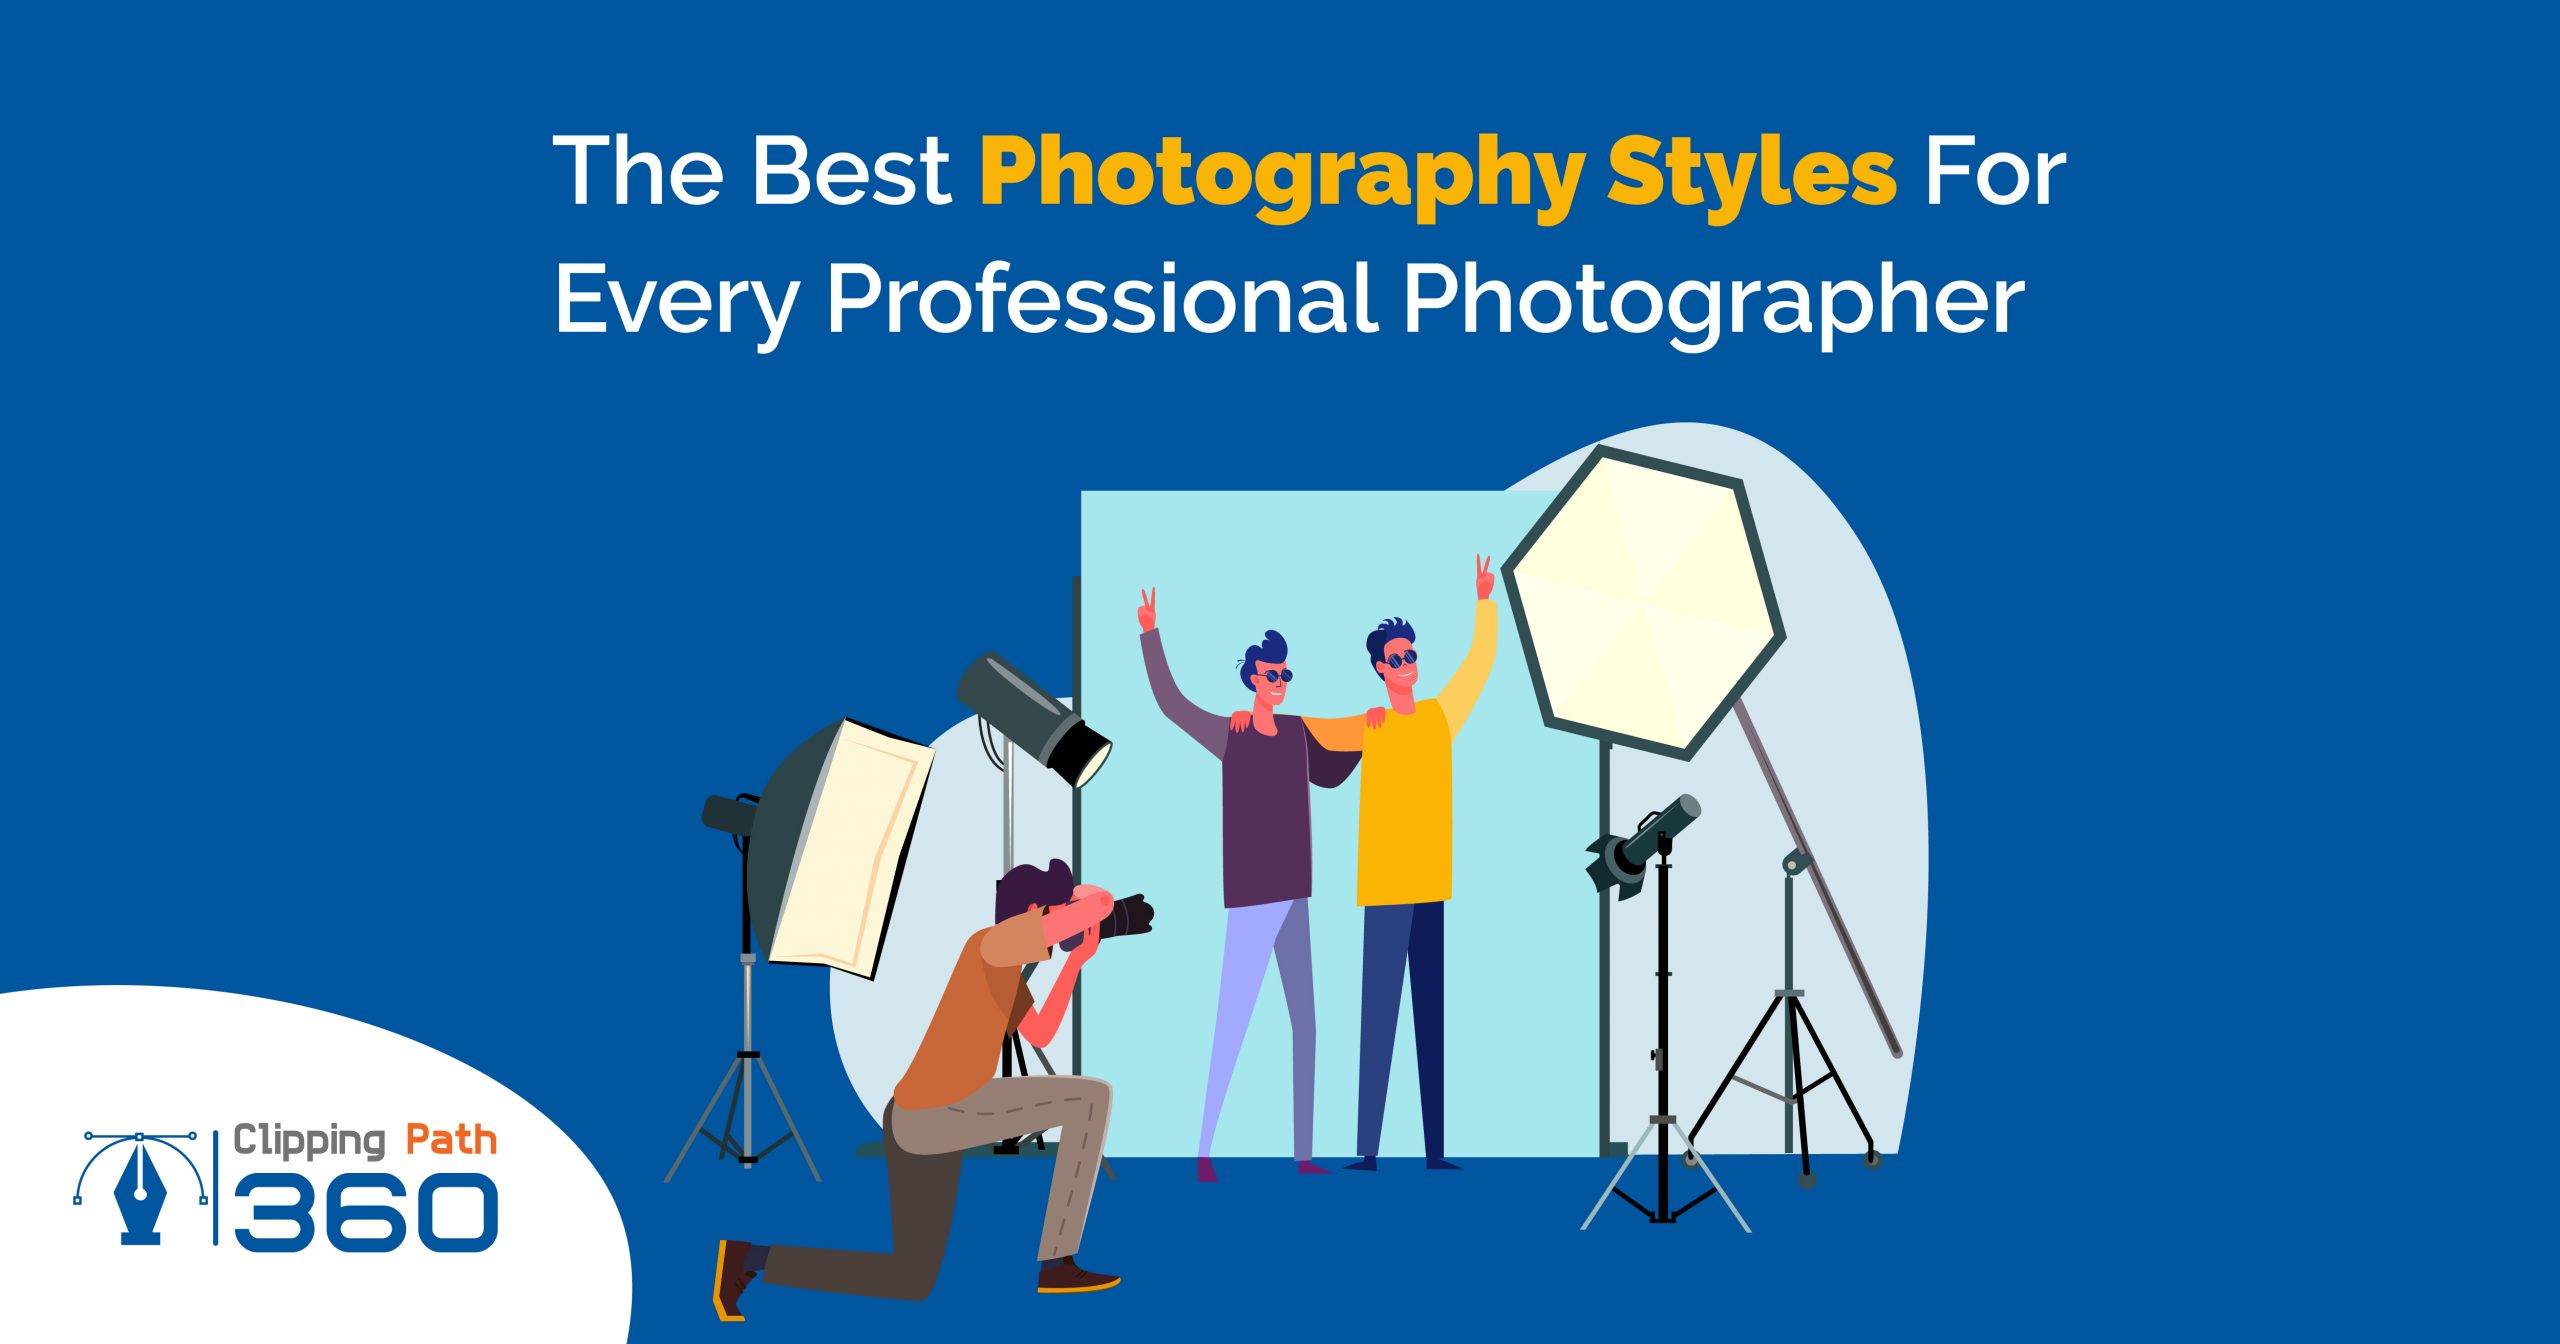 Best Photography StylesBest Photography Styles